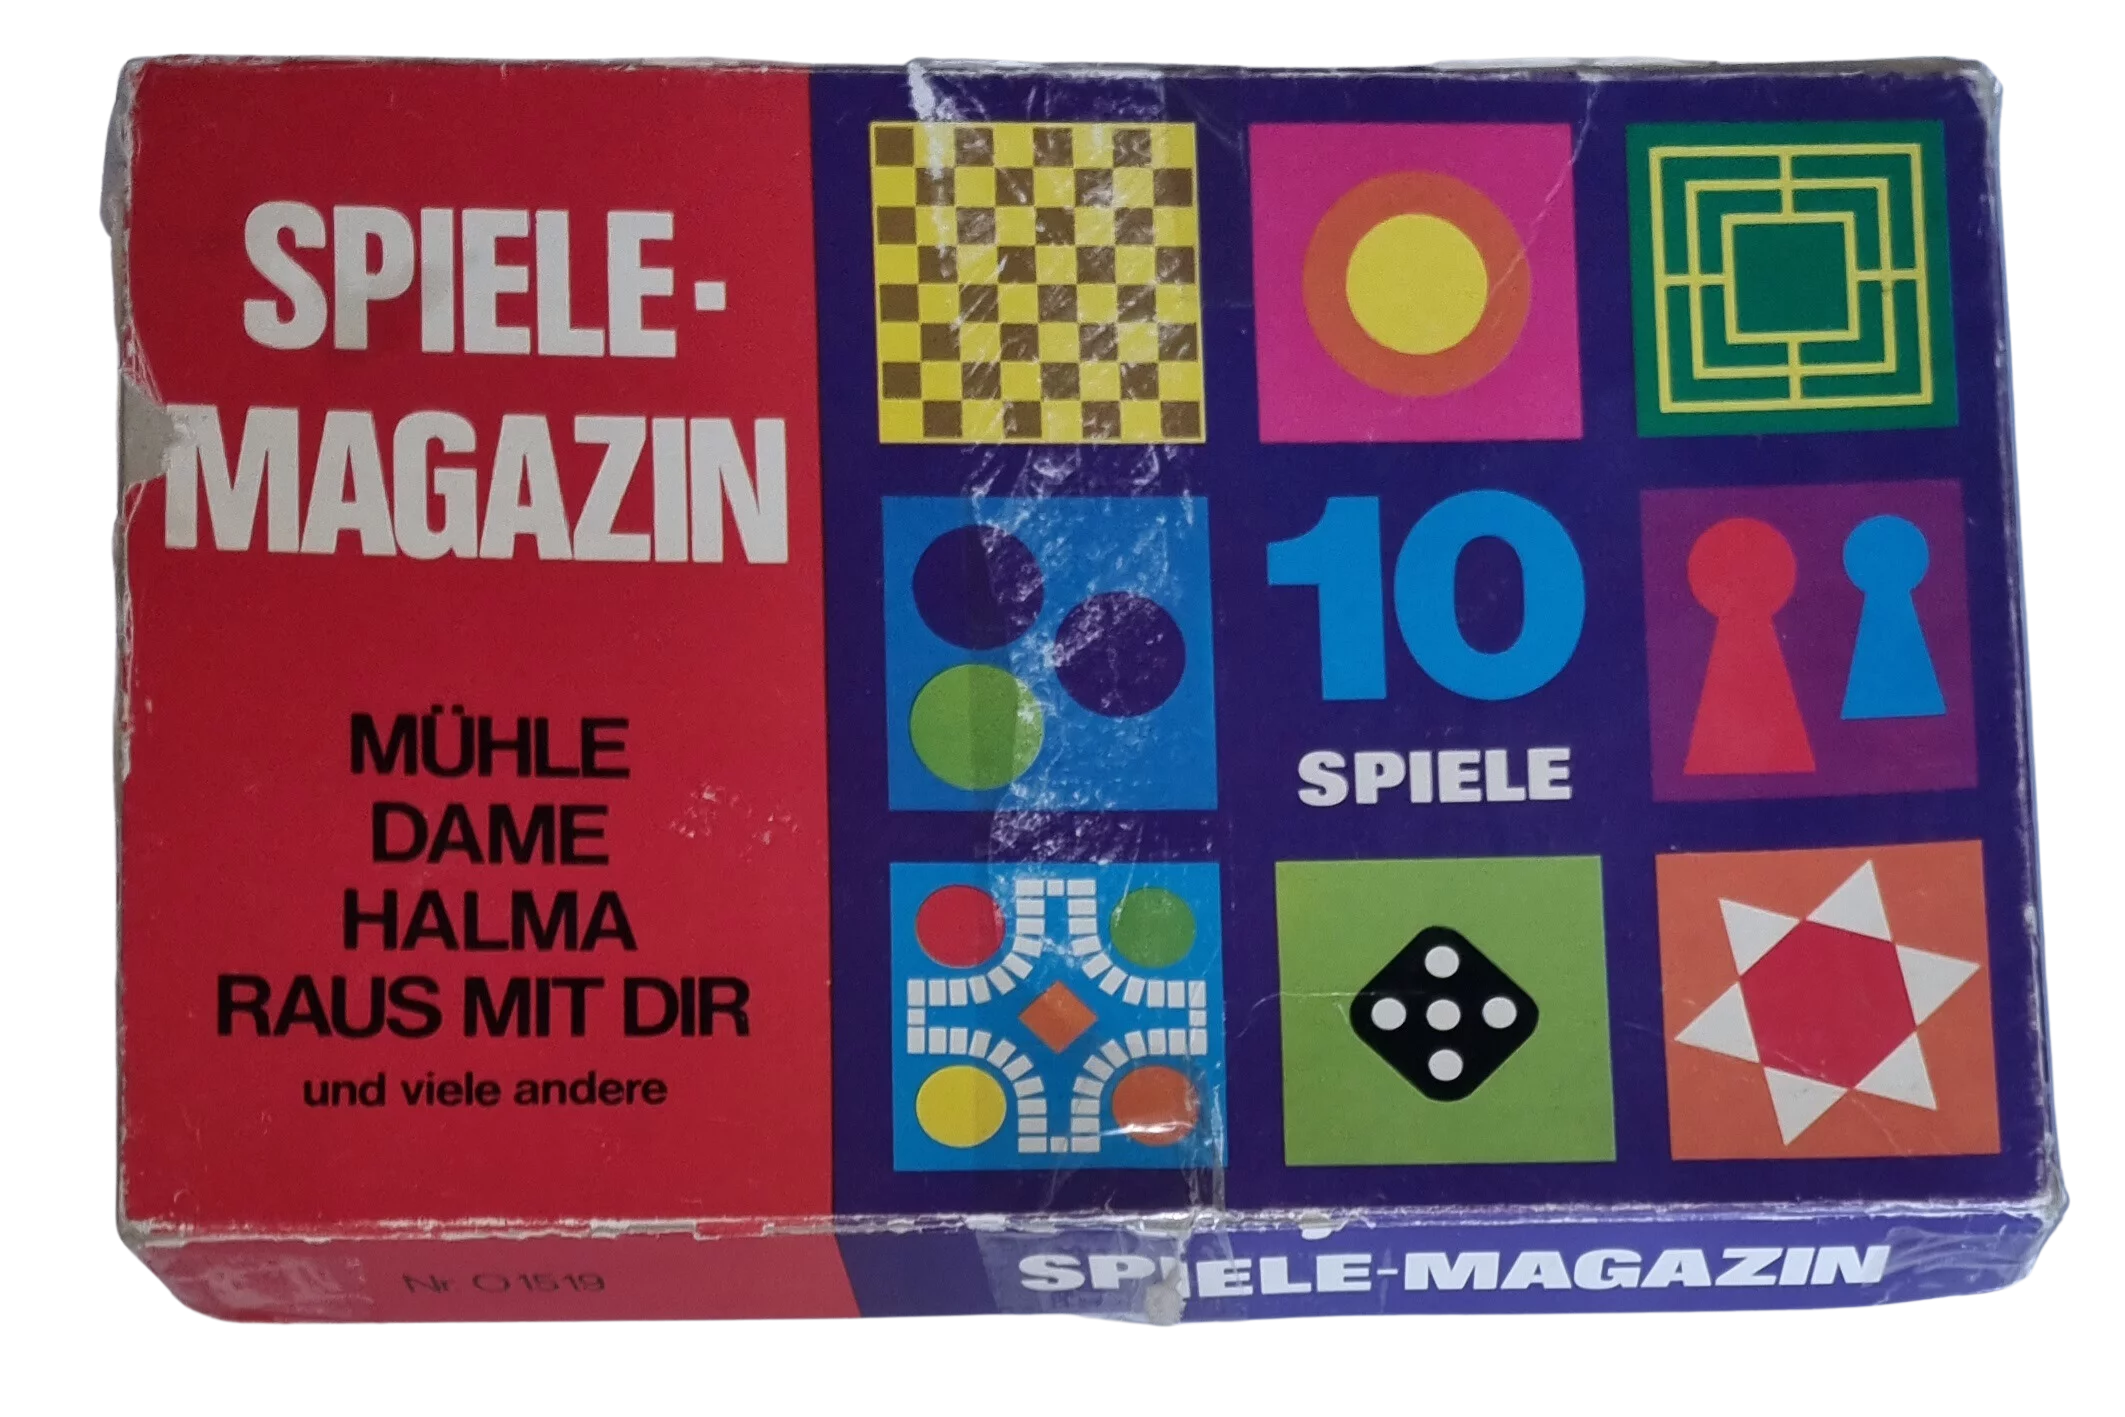 Spiele-Magazin 10 Spiele